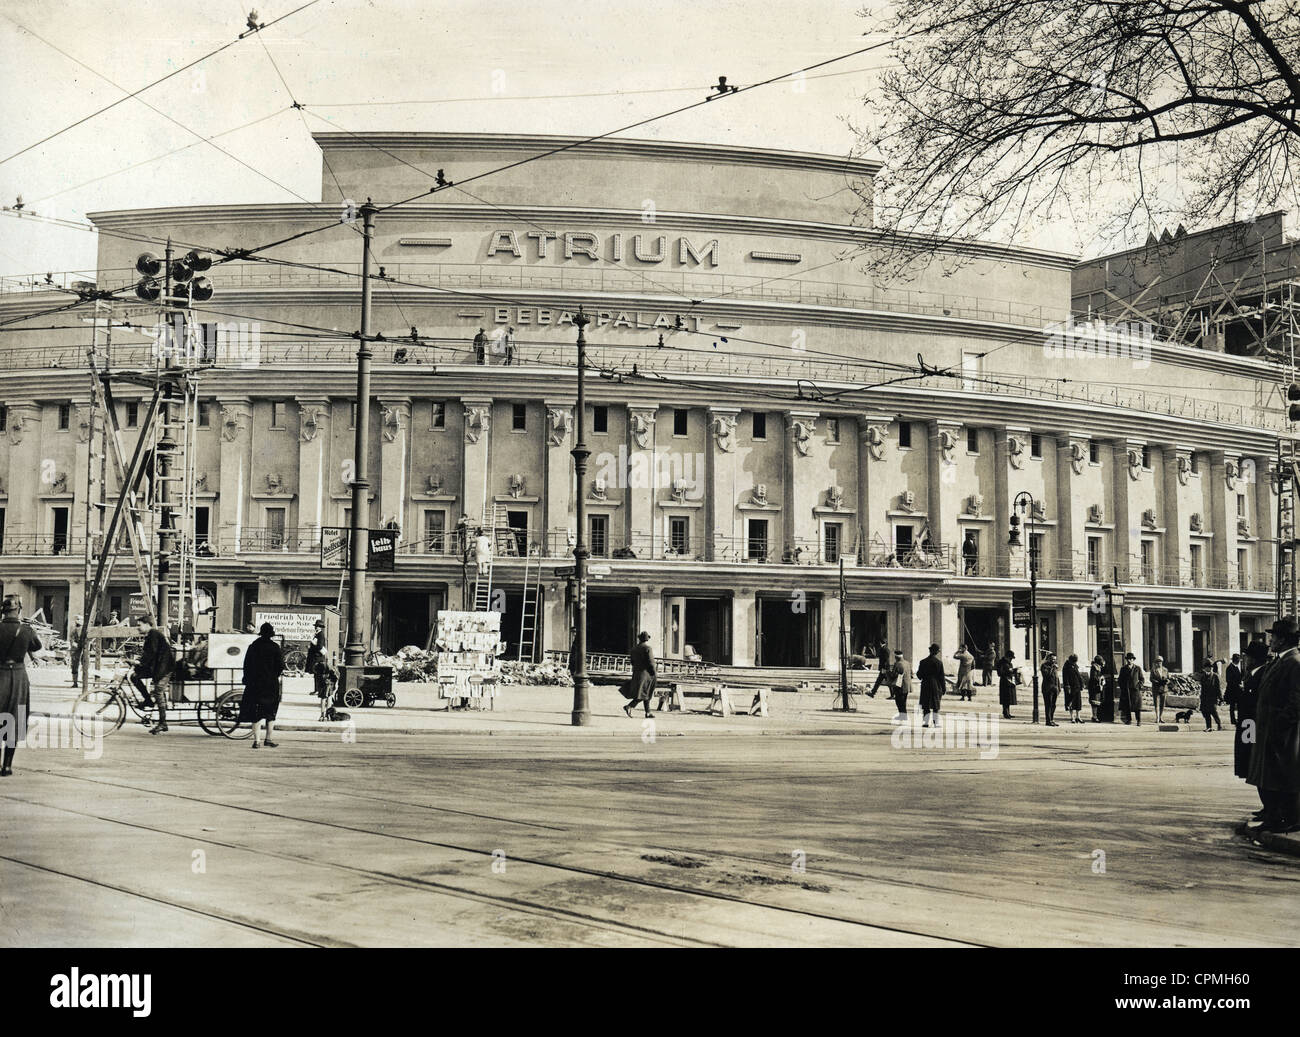 The Atrium Beba Palast in Berlin, 1927 Stock Photo